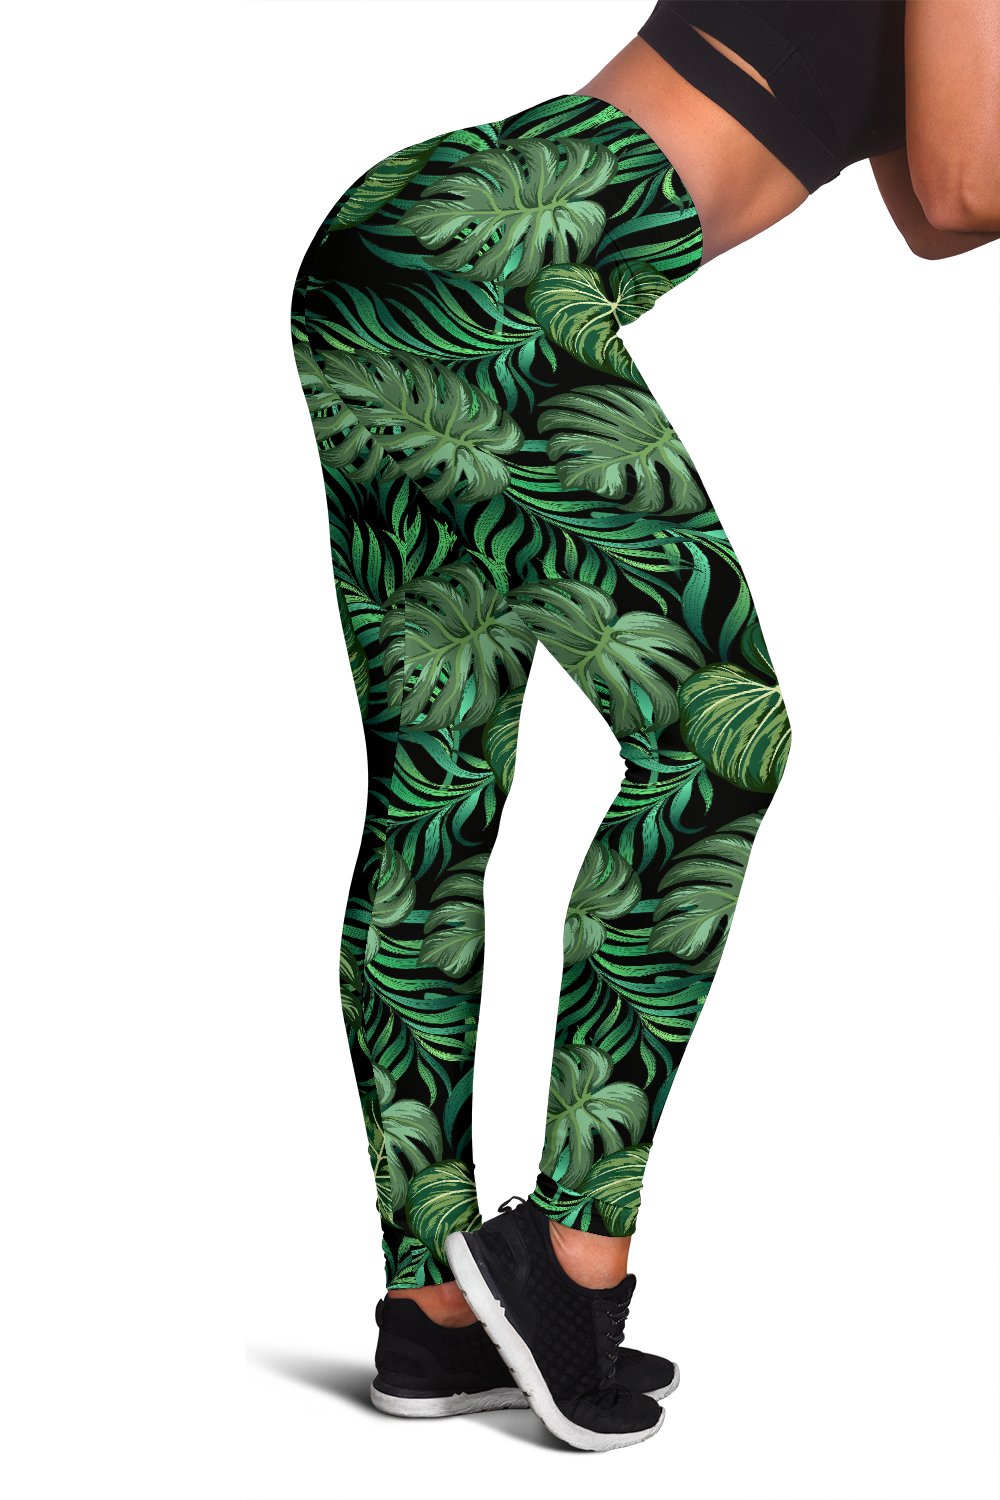 Green Fresh Tropical Palm Leaves Women Leggings